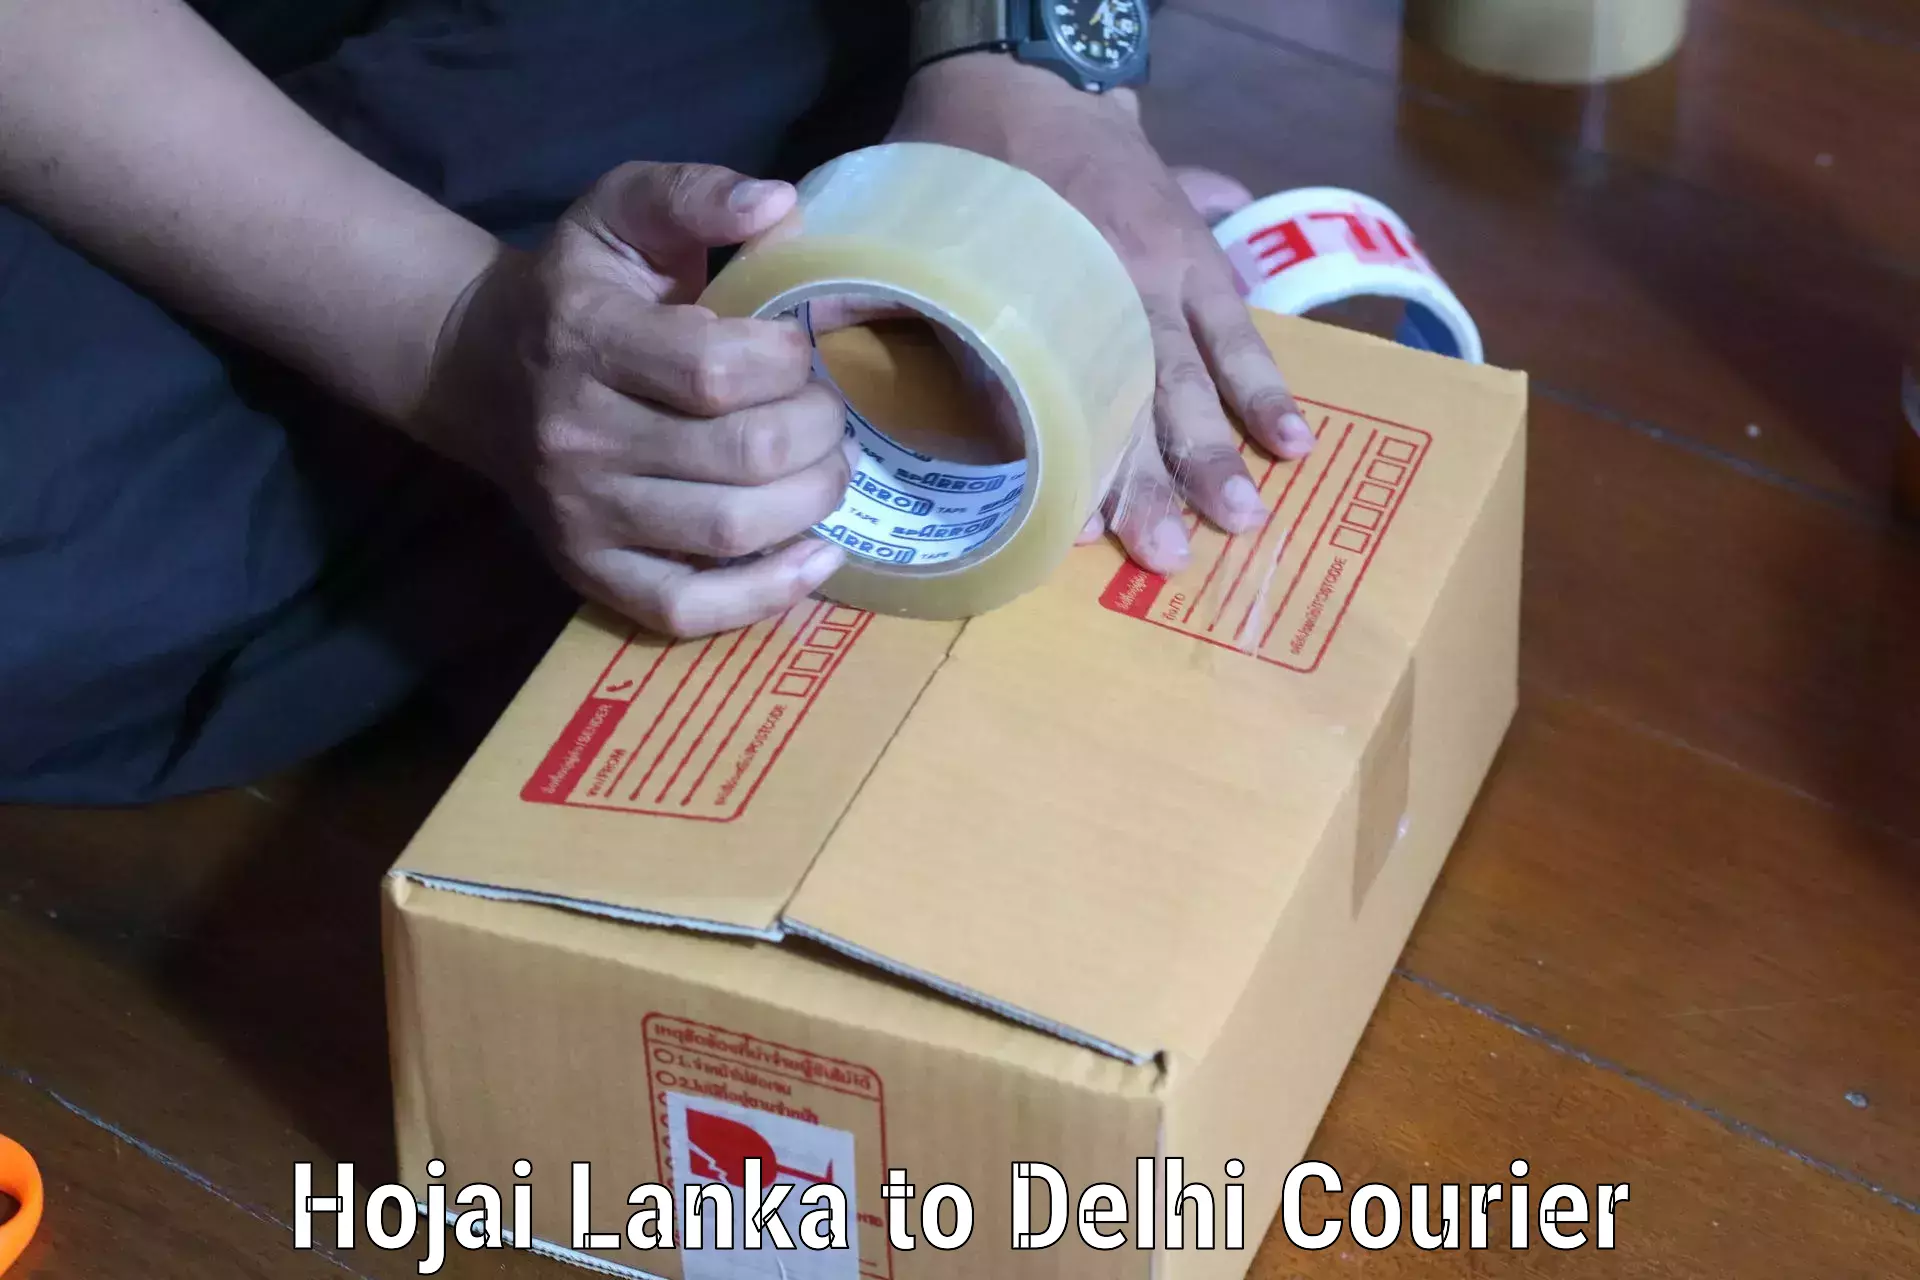 Nationwide courier service Hojai Lanka to Delhi